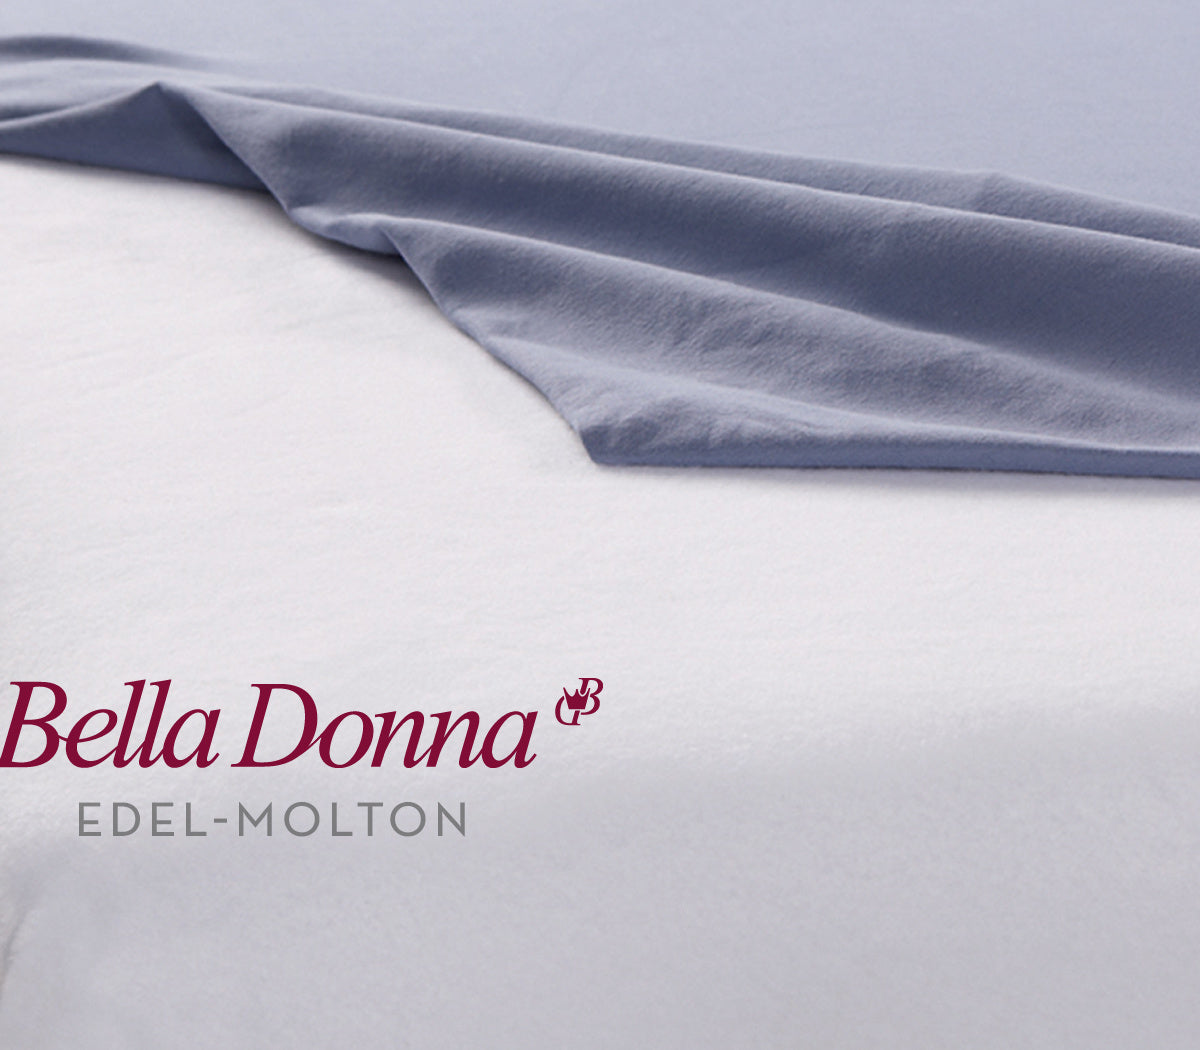 Bella Donna matrasbeschermer Edel-Molton  - Bella Donna protège-matelas Edel-Molton - Bella Donna mattress protector Edel-Molton